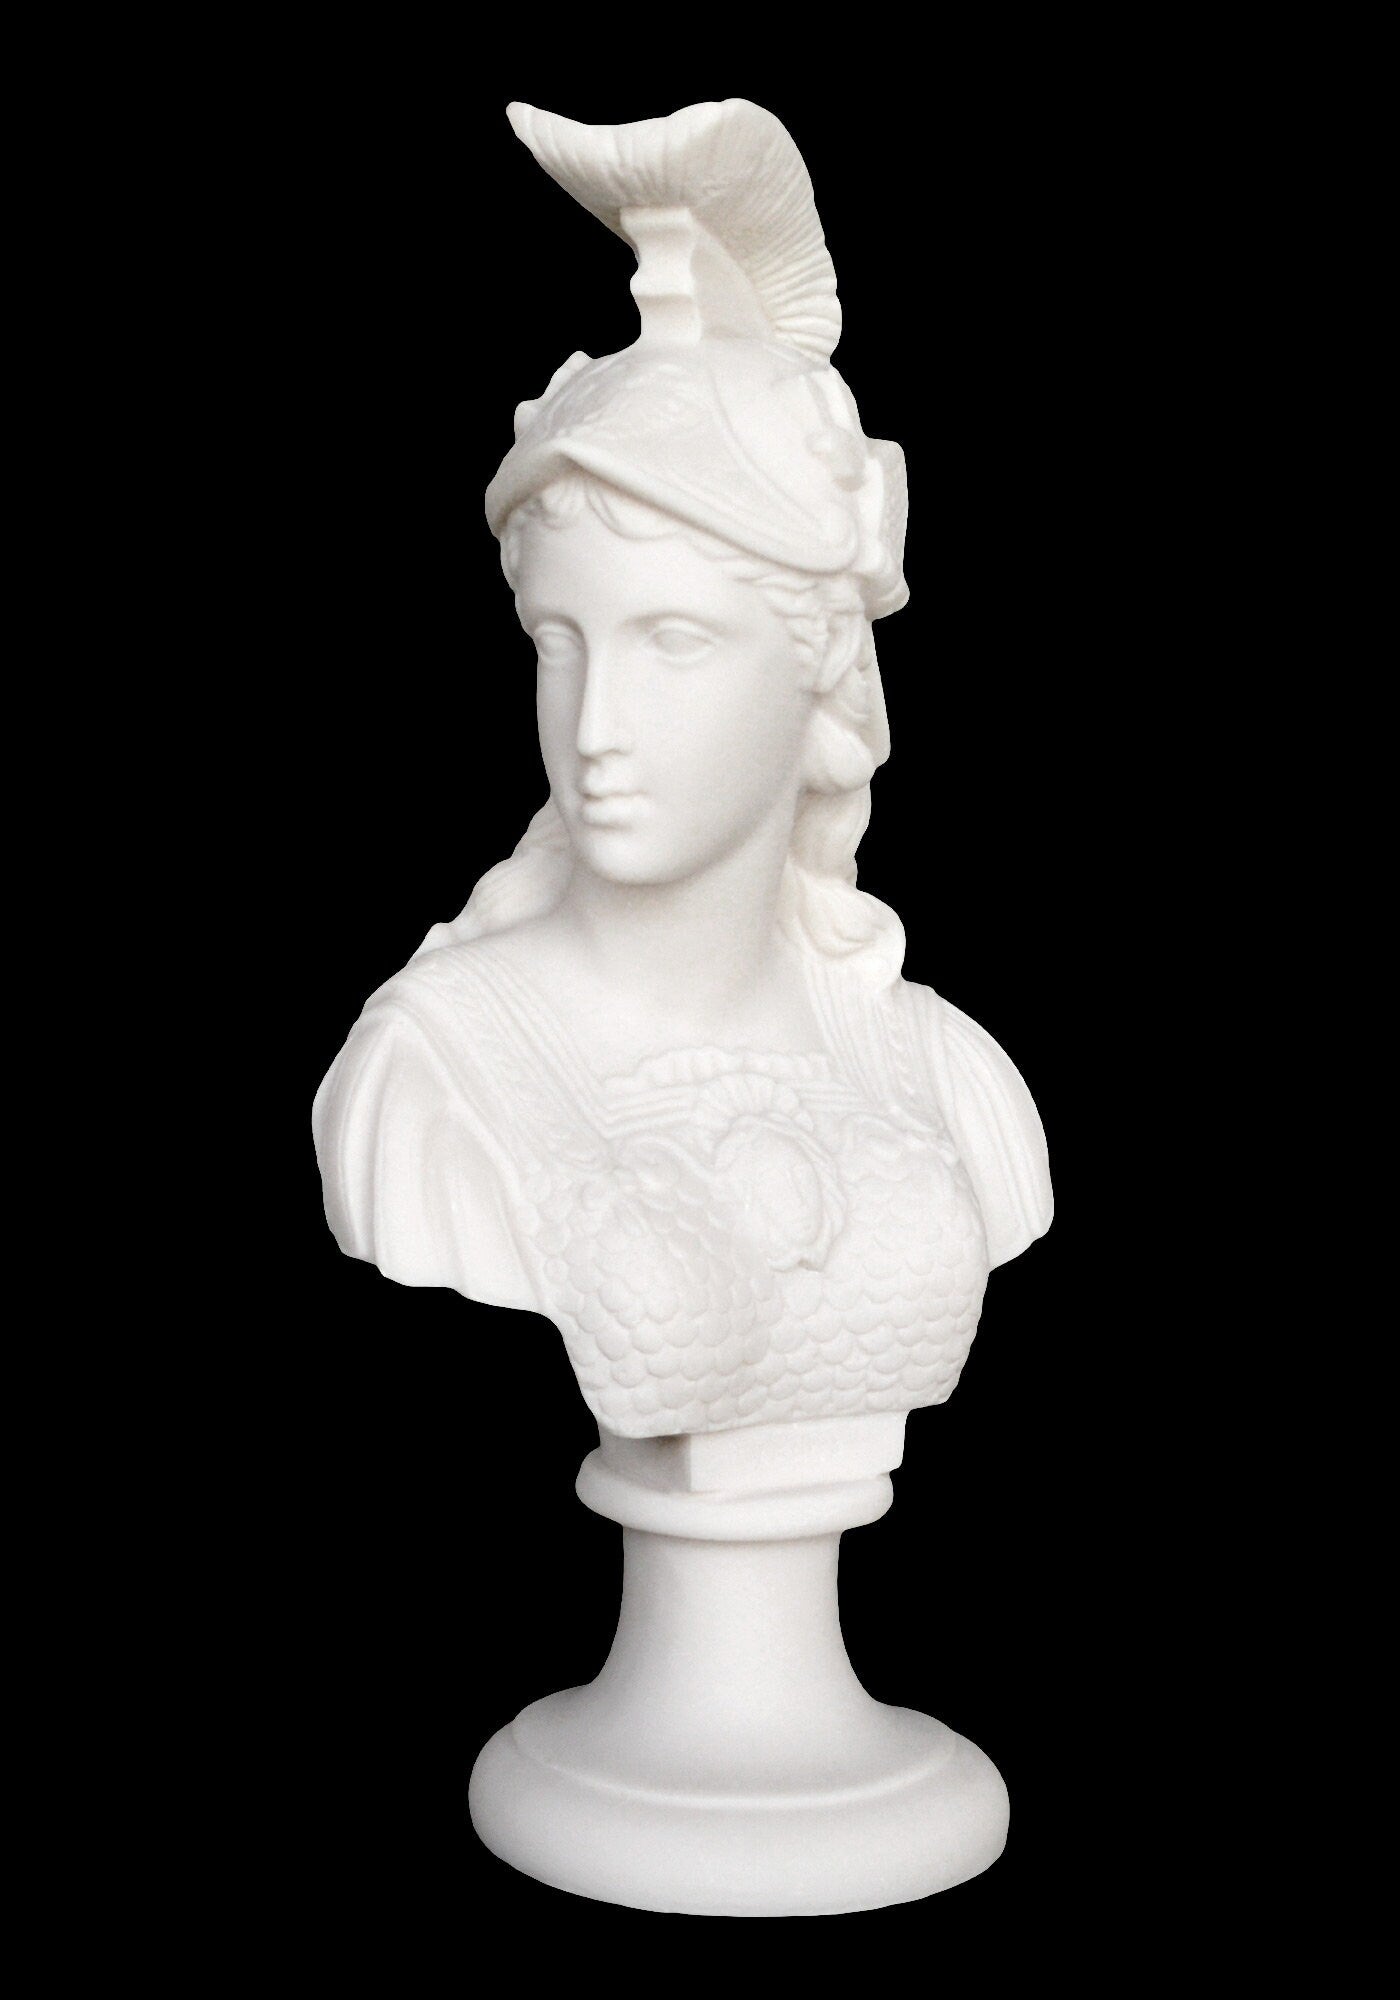 Athena Minerva Bust - Greek Roman Goddes of Wisdom, Strength, Strategy, Courage, Inspiration, Arts, Crafts, and Skill - Alabaster Sculpture